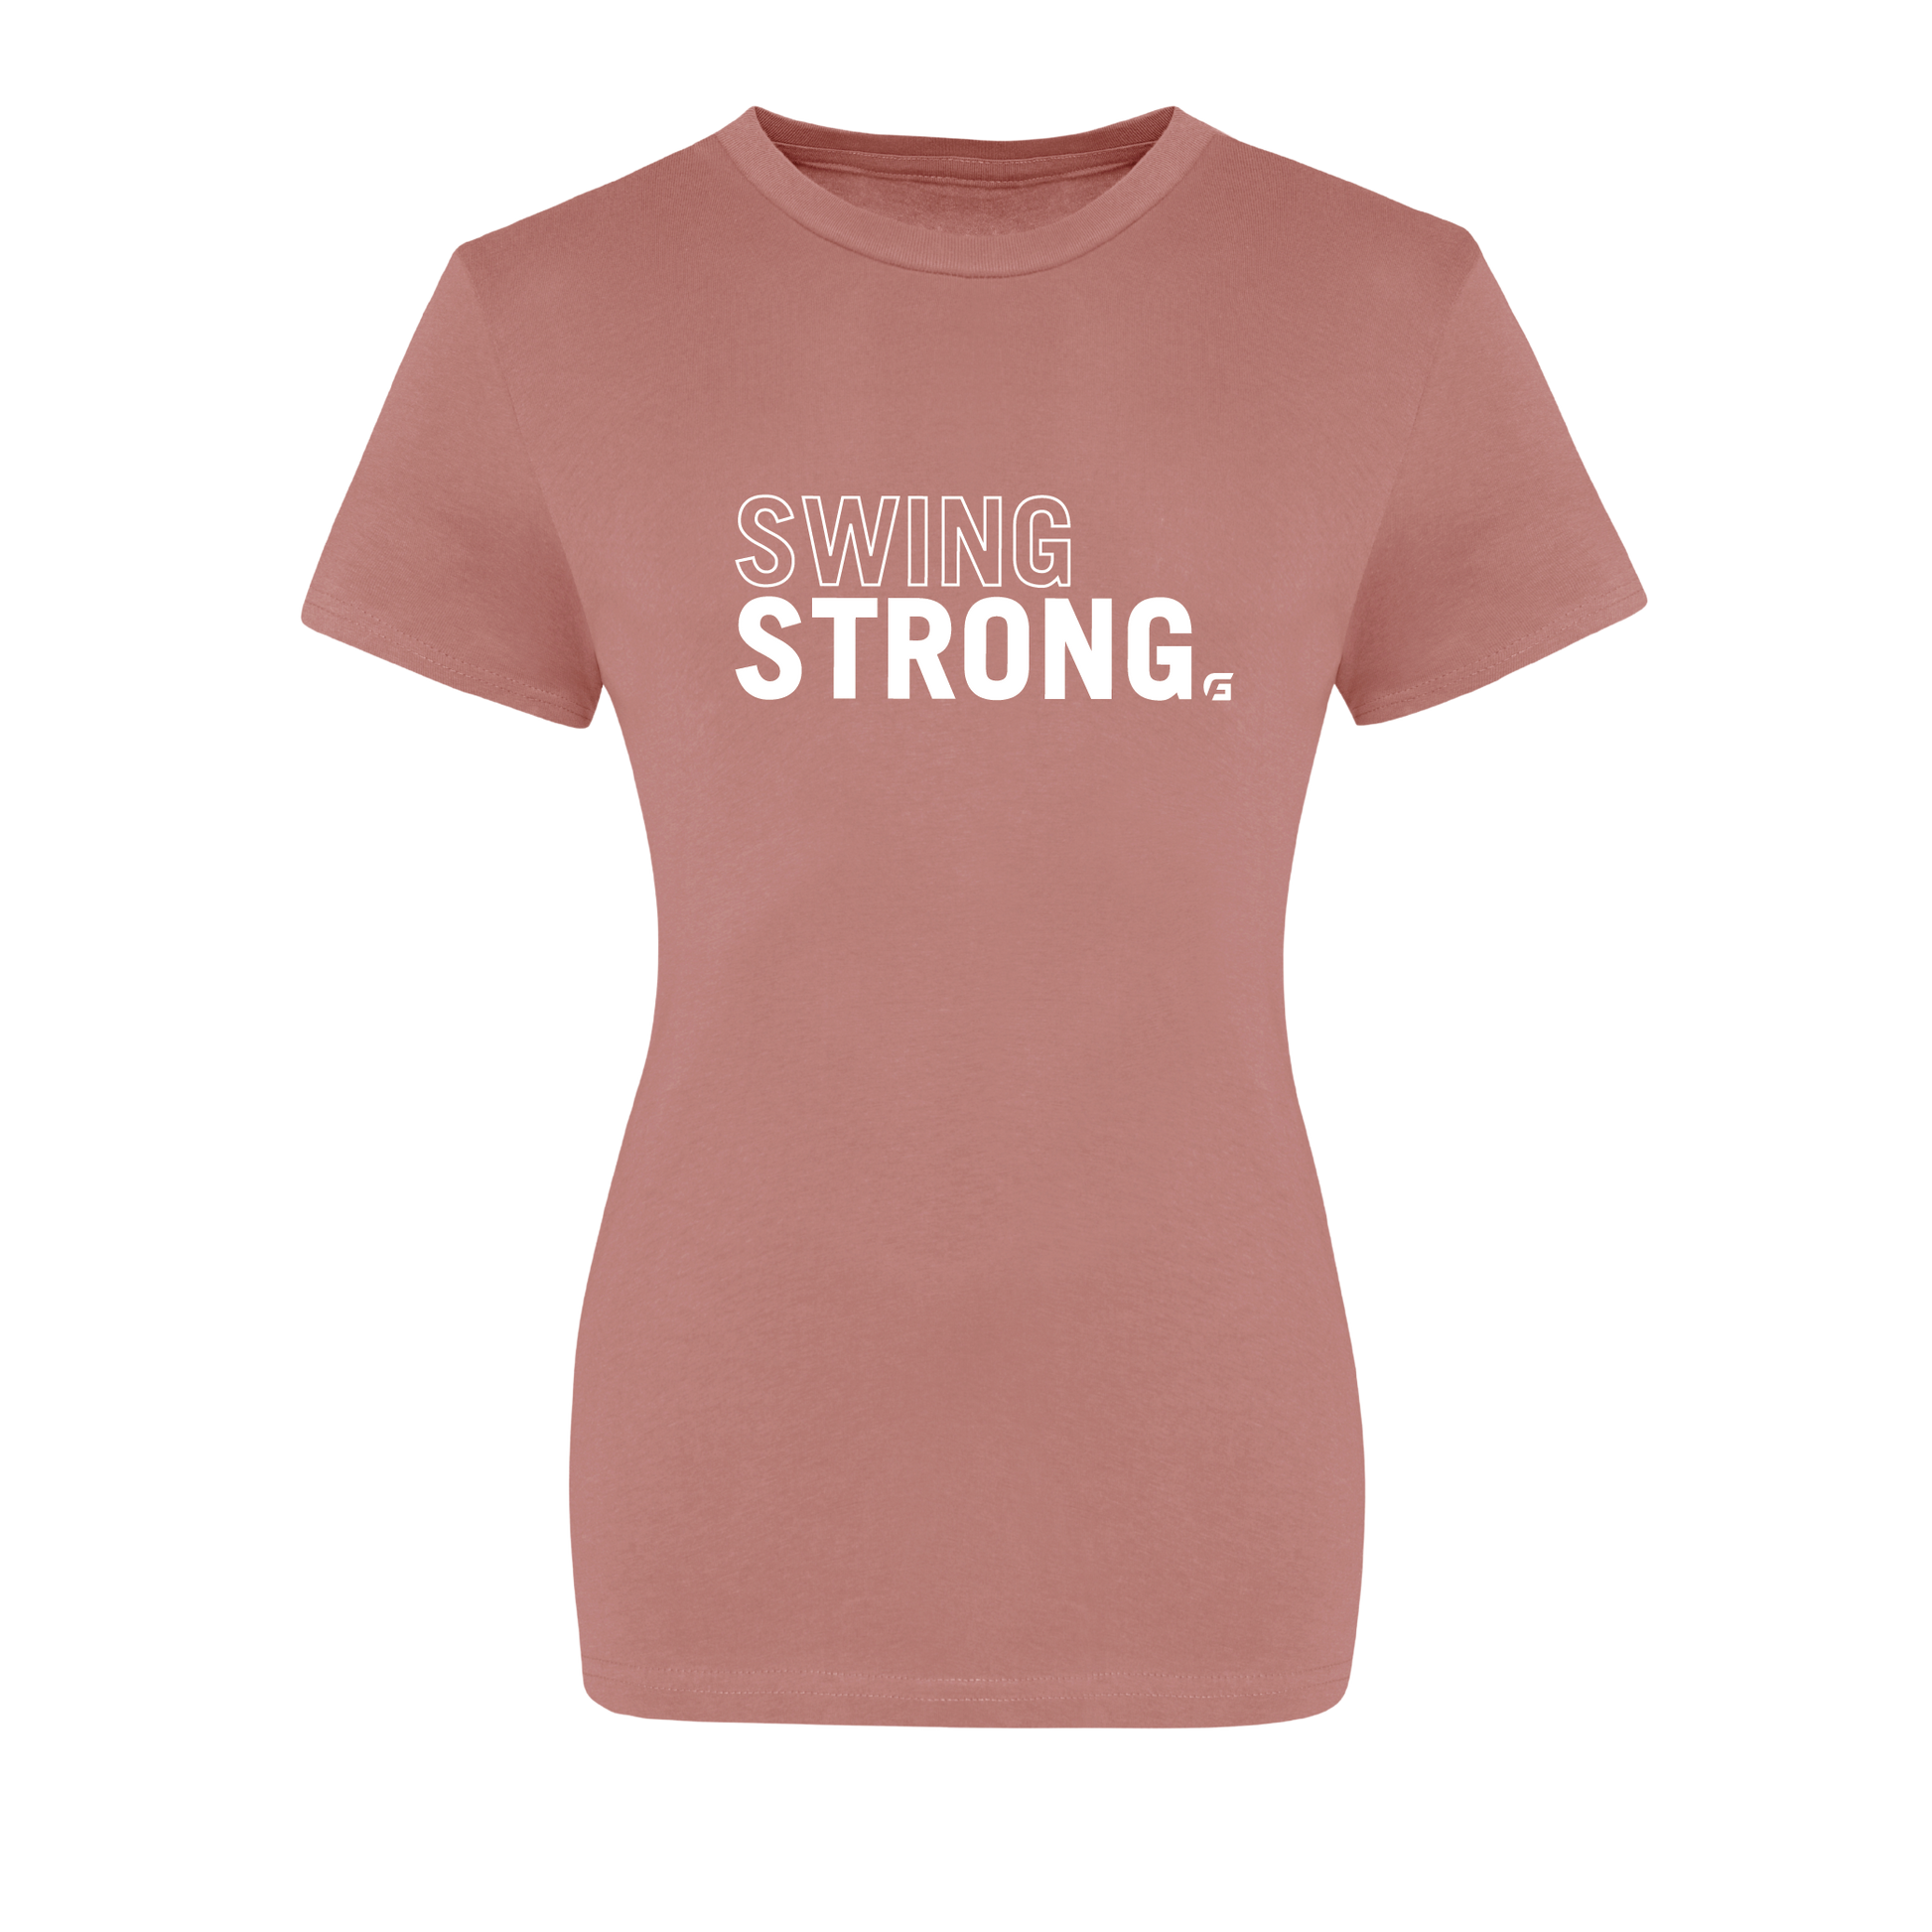 Focusgolf Swing Stronger Women's Dusty Pink Tee